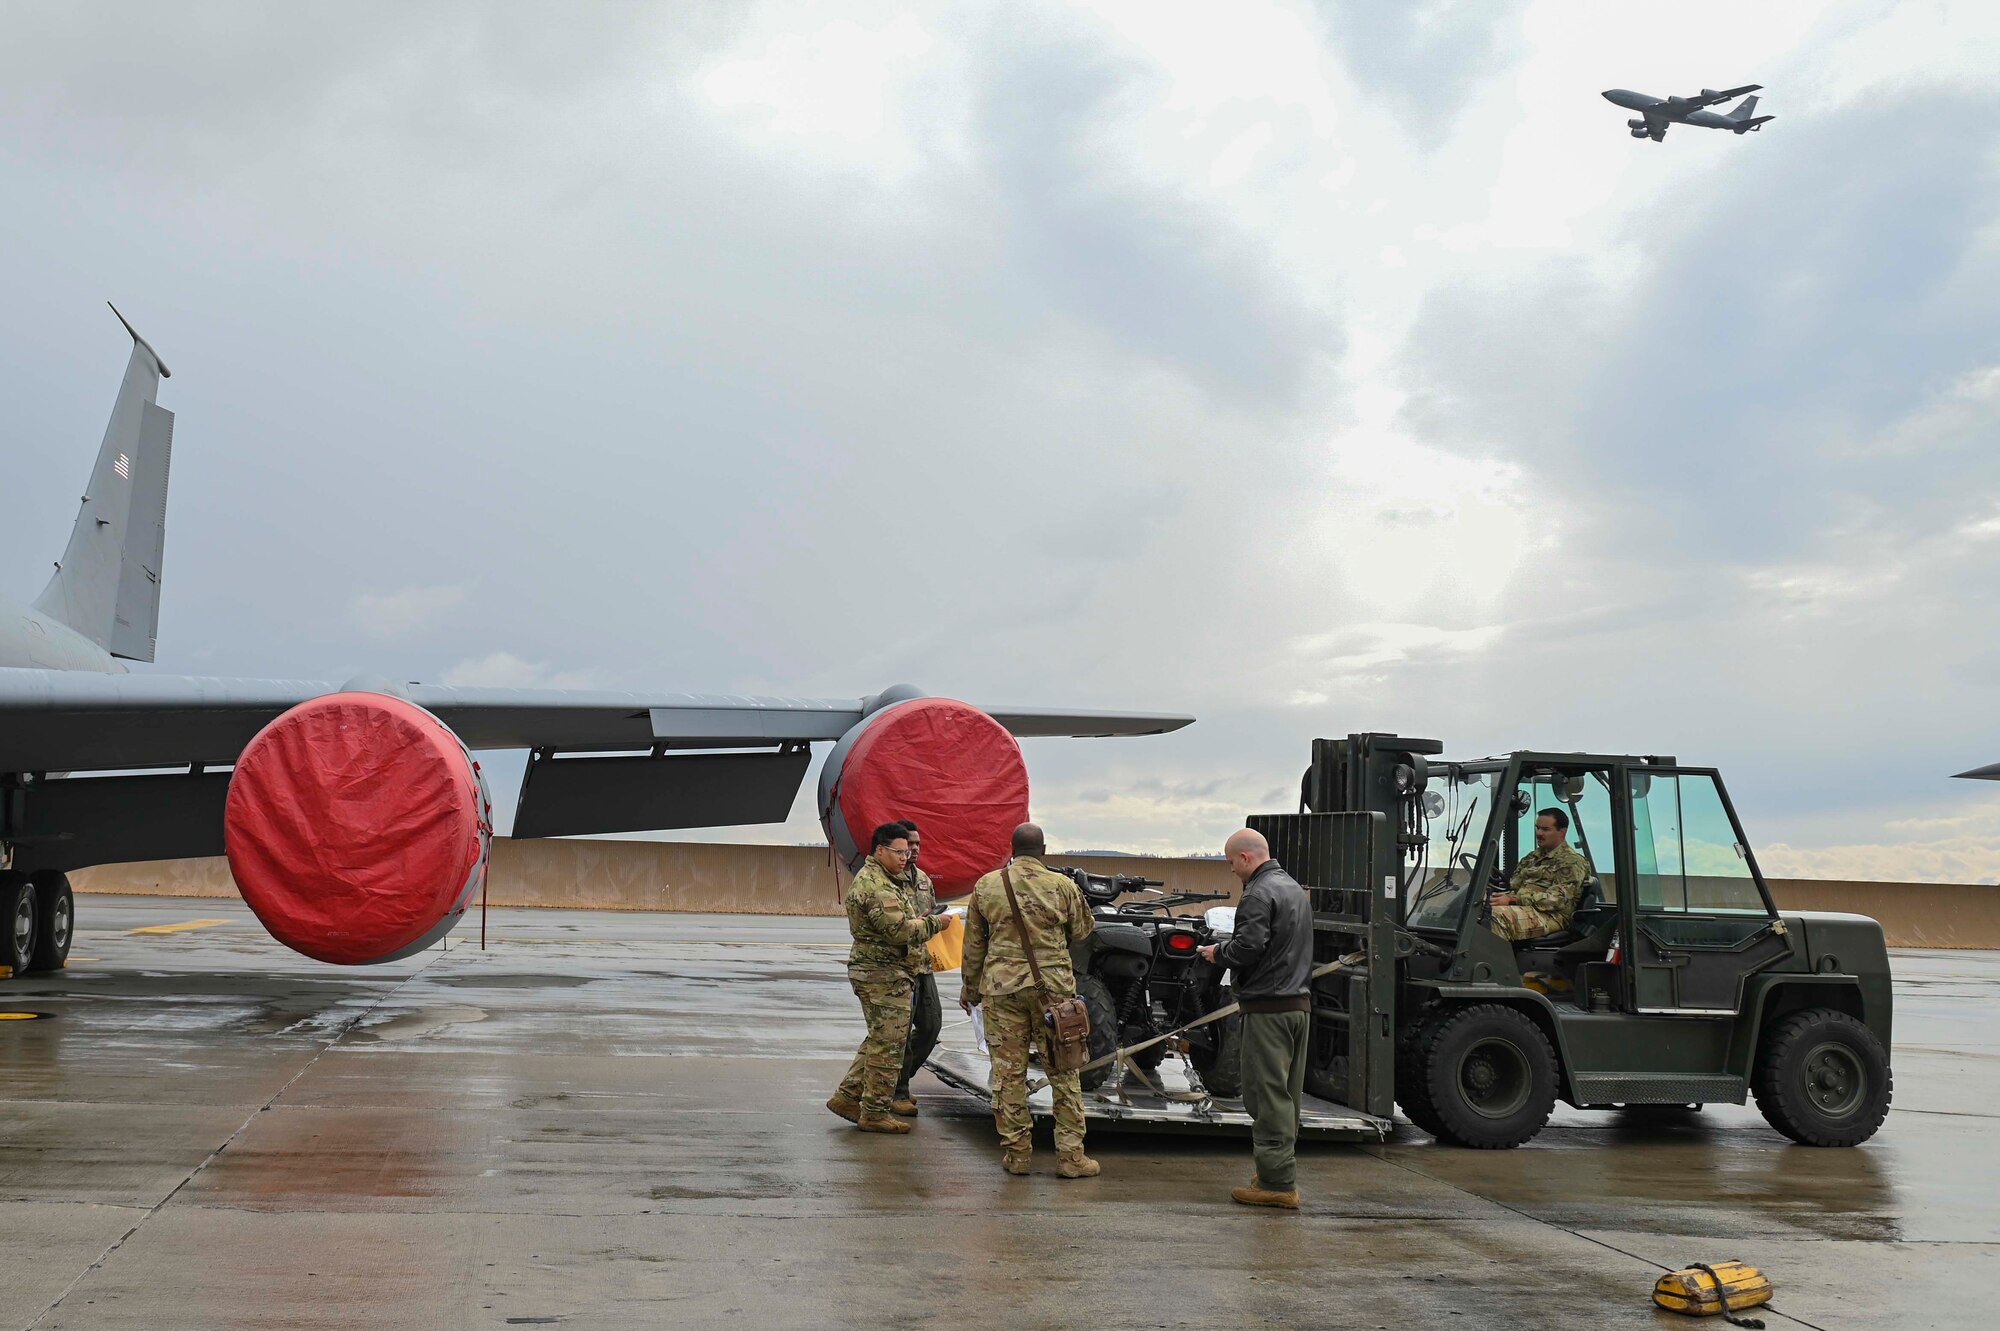 Airmen inspect cargo on a forklift